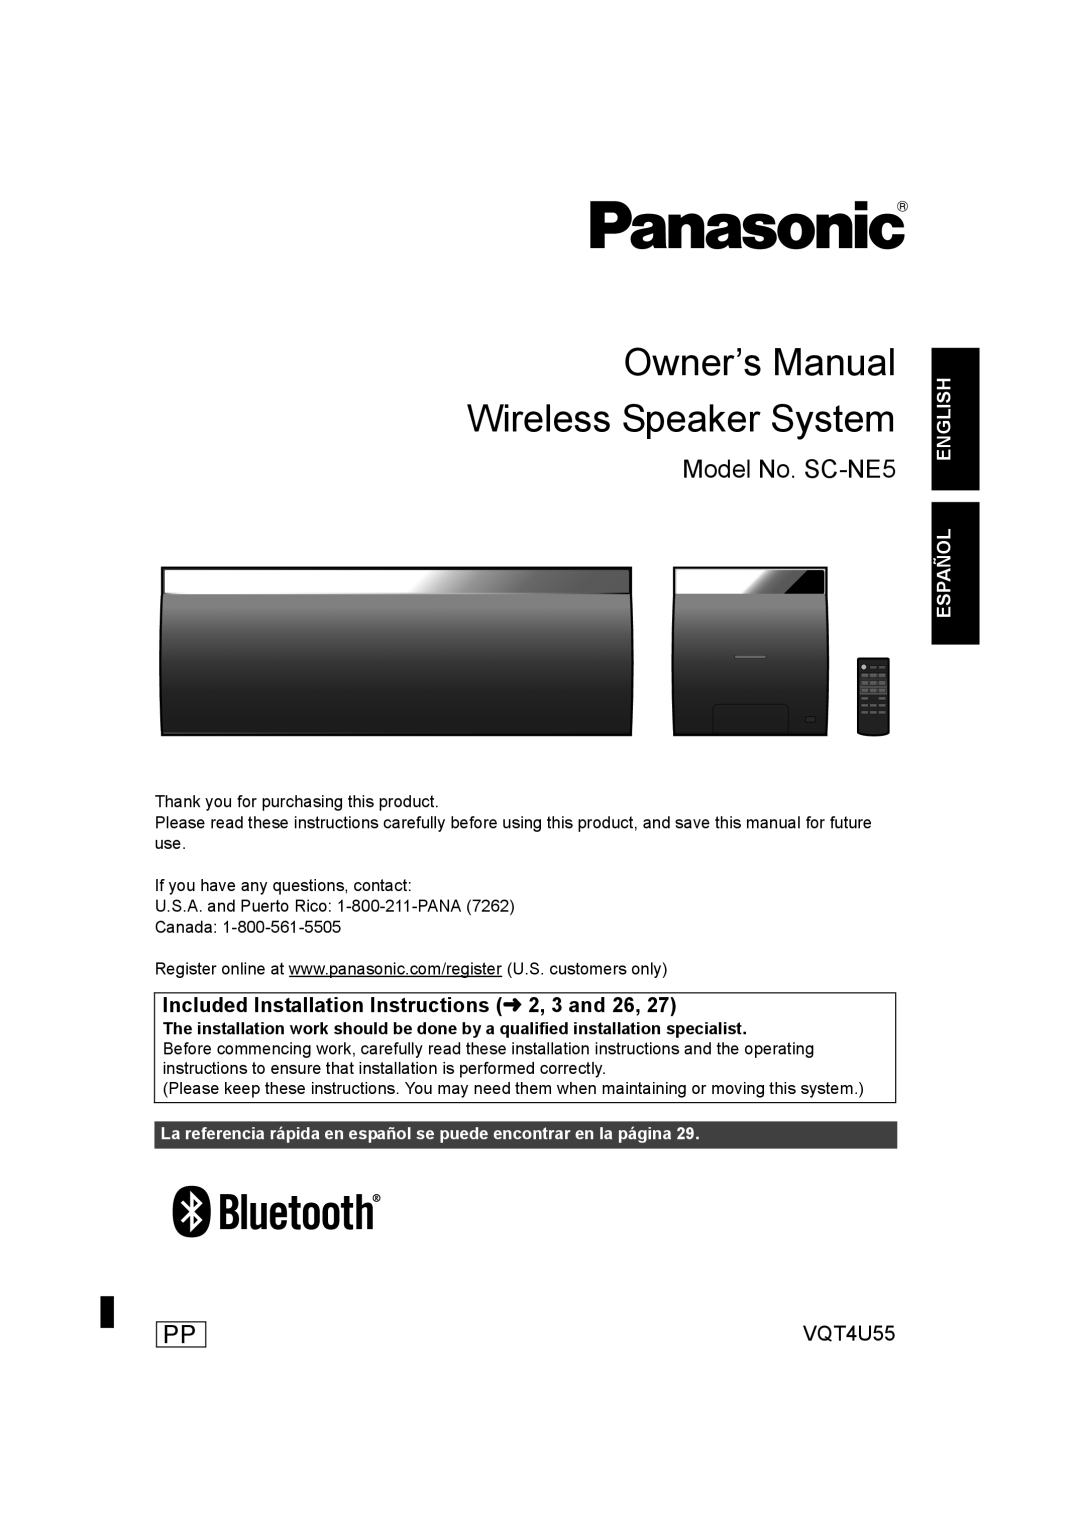 Panasonic owner manual VQT4U55, Español English, Model No. SC-NE5, Included Installation Instructions l 2, 3 and 